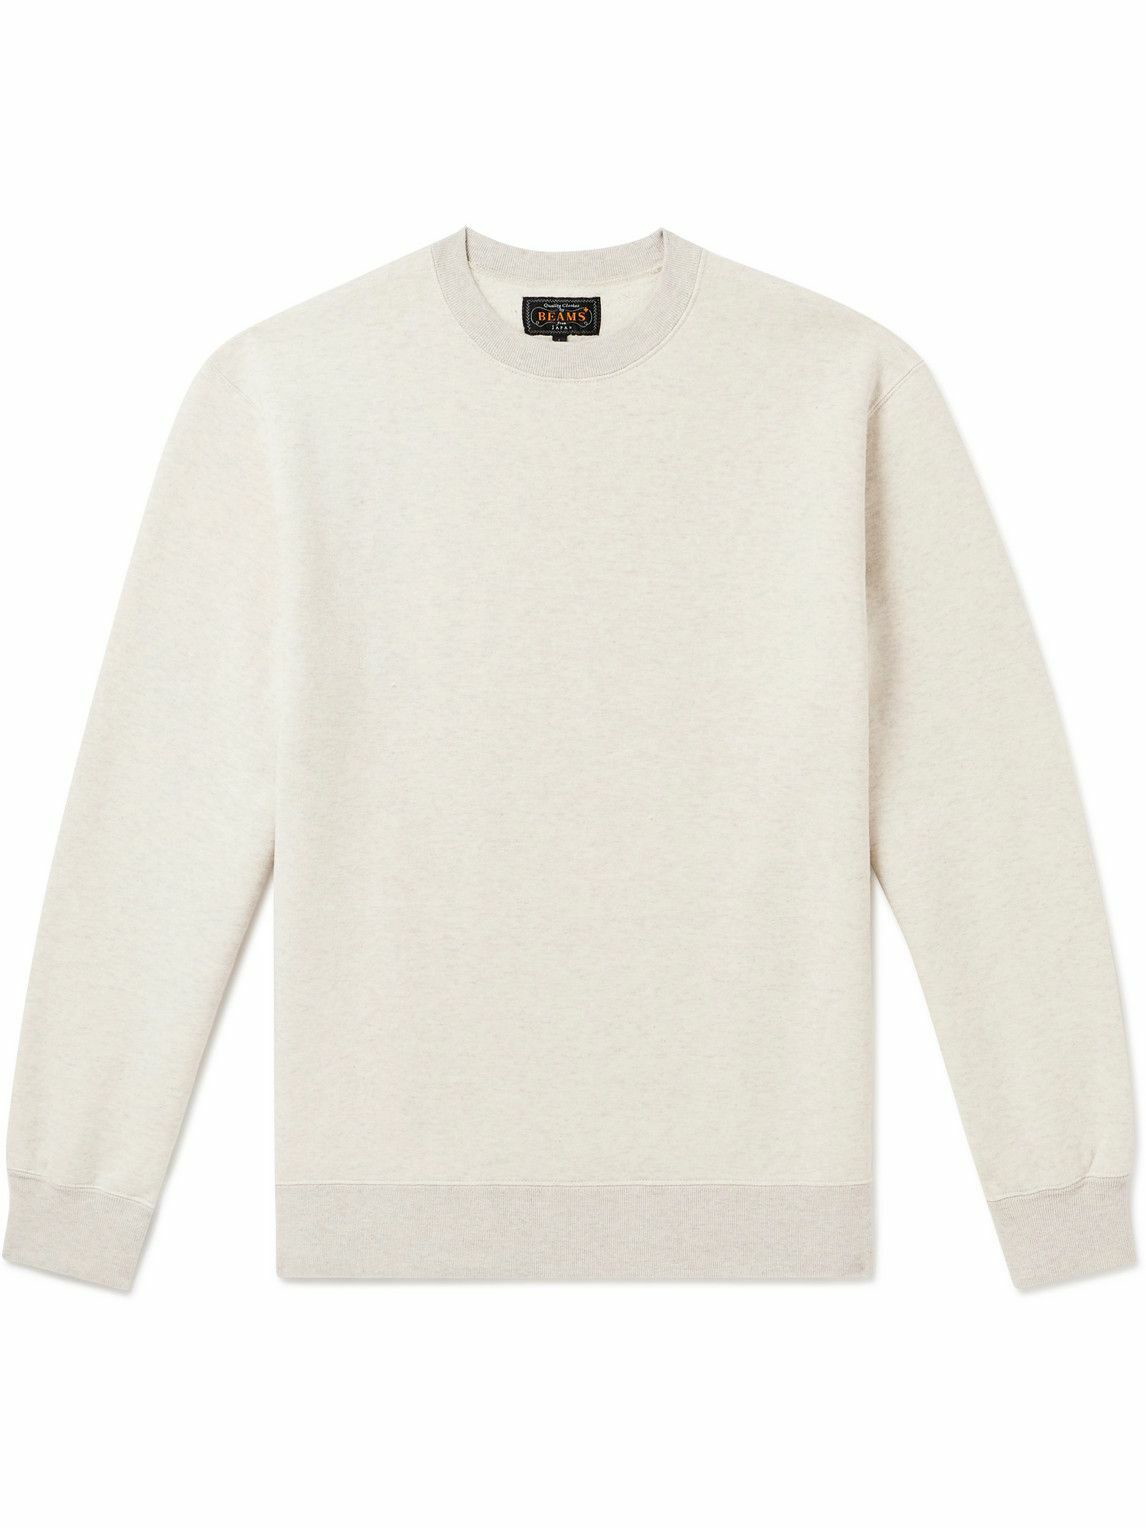 Beams Plus - Cotton-Jersey Sweatshirt - Neutrals Beams Plus